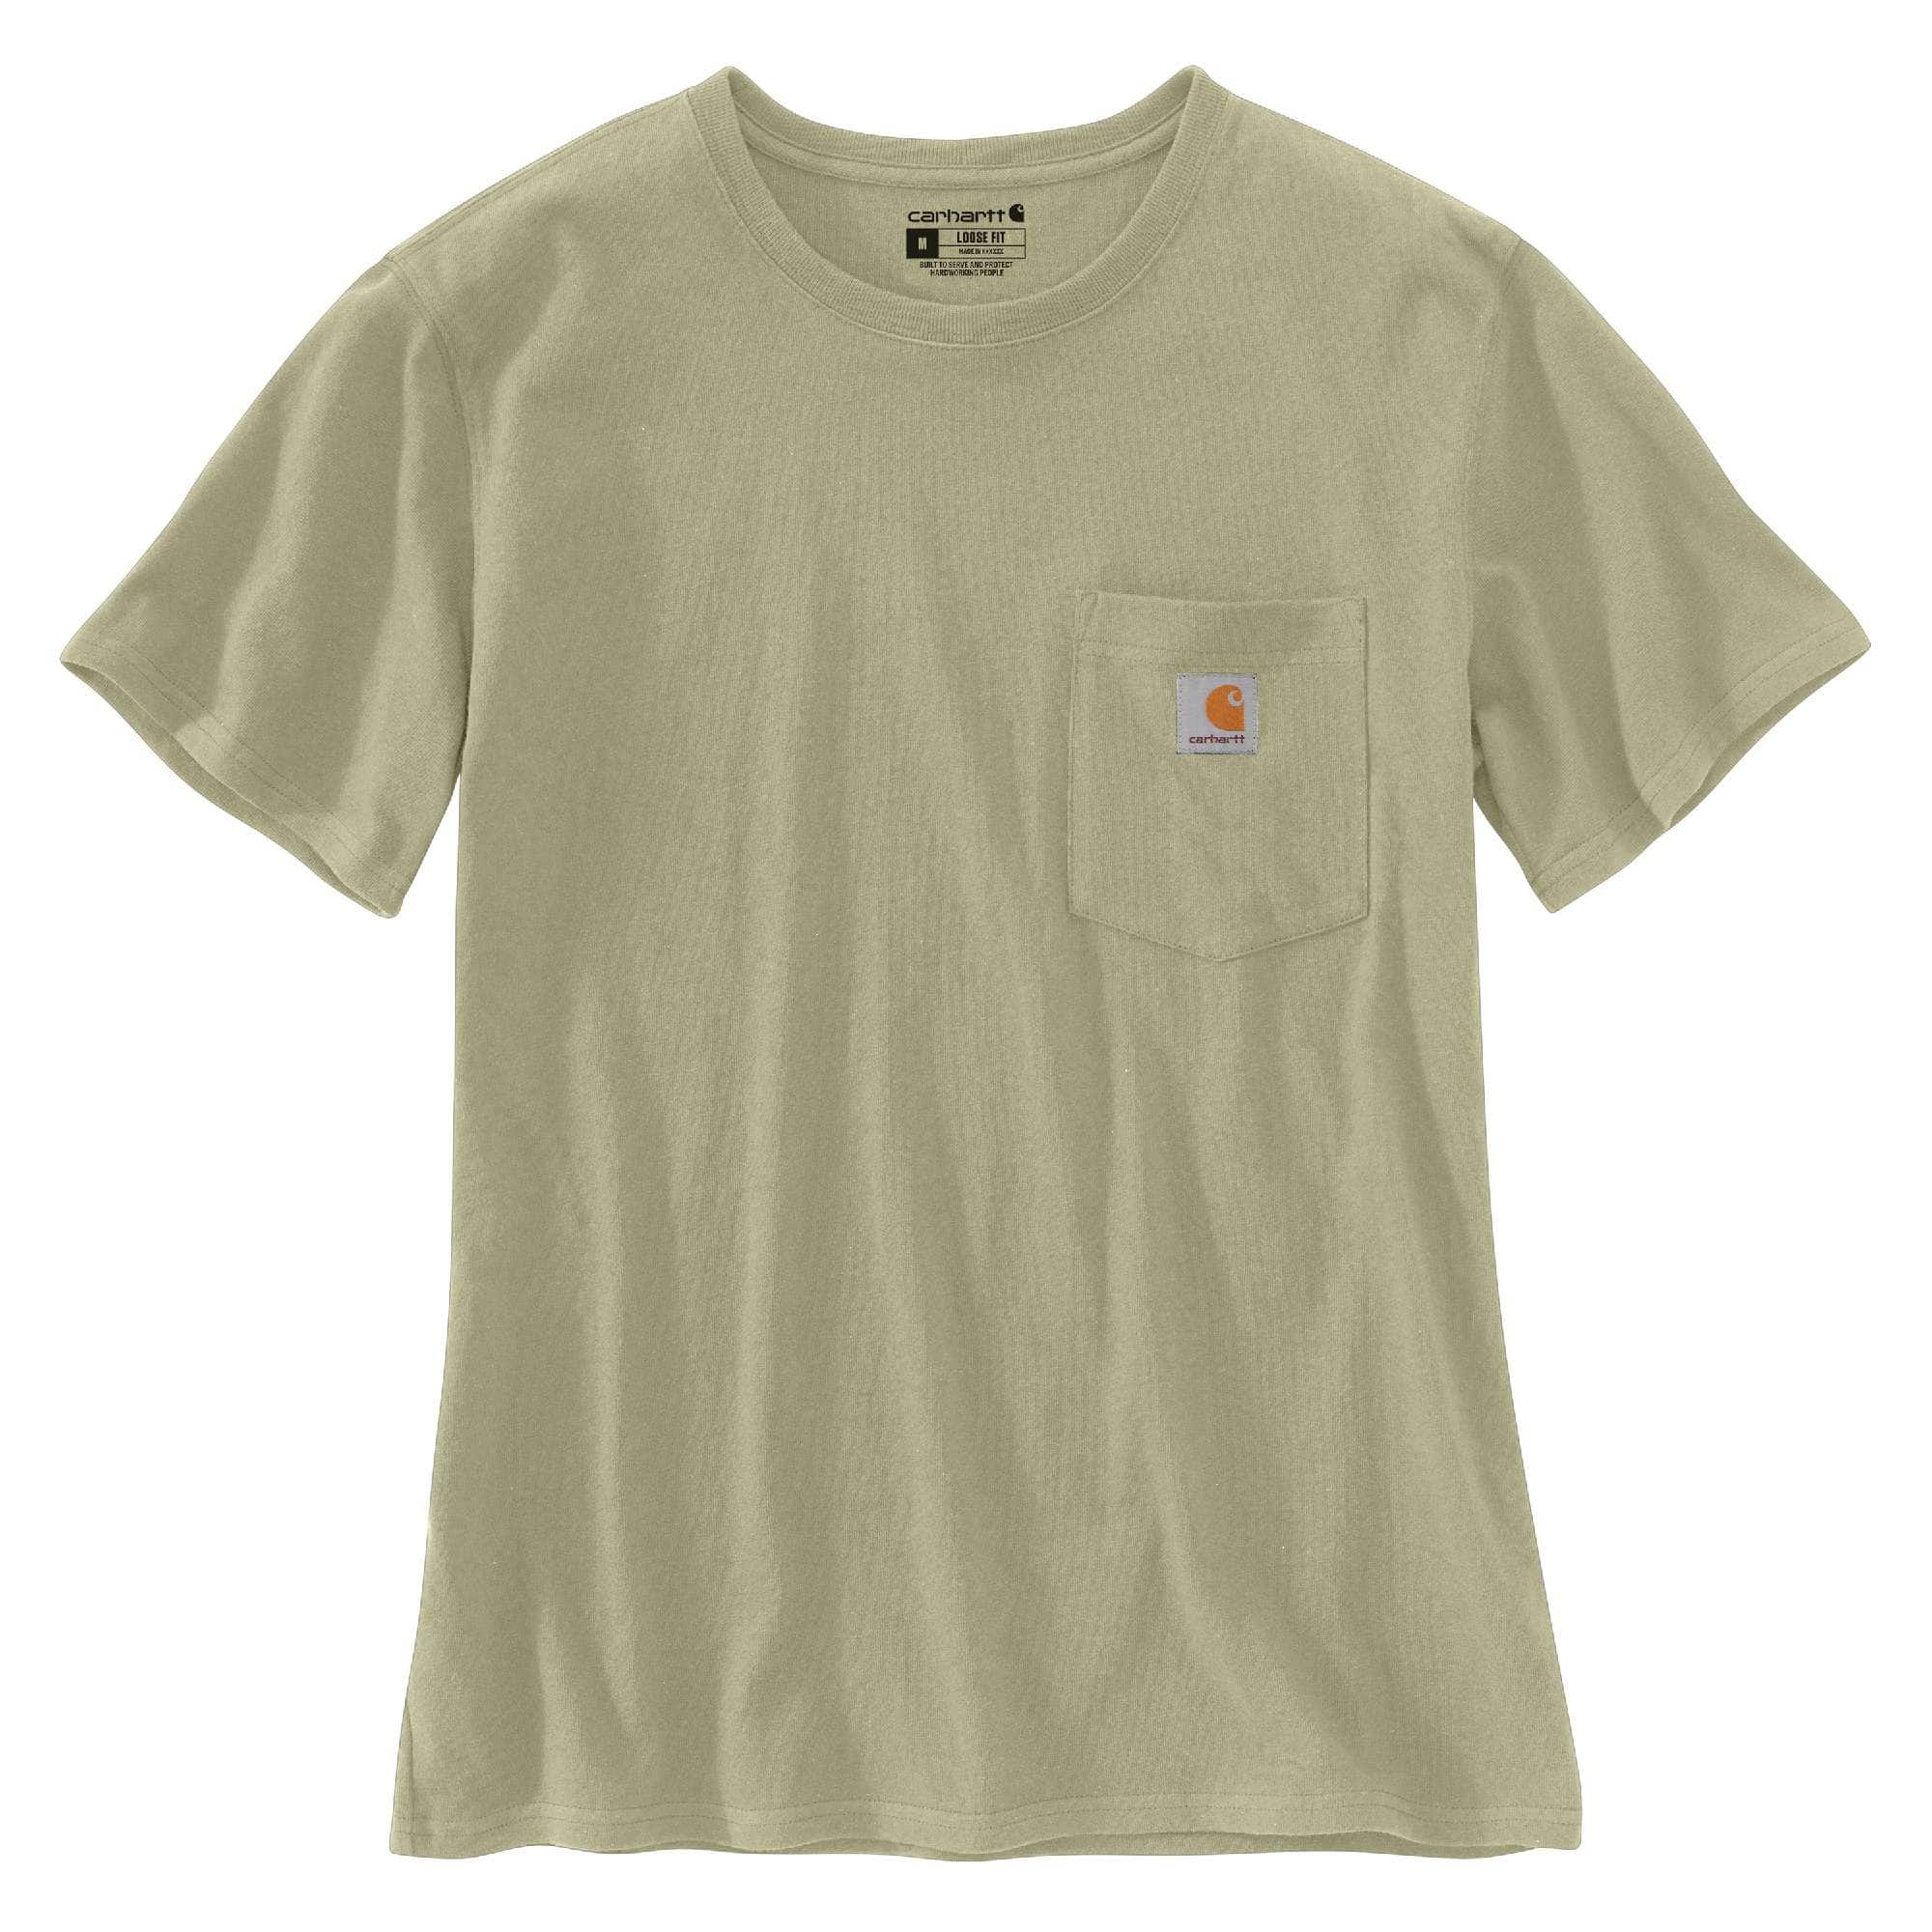 Carhartt Women's Force Short Sleeve Pocket T-shirt - Blackberry